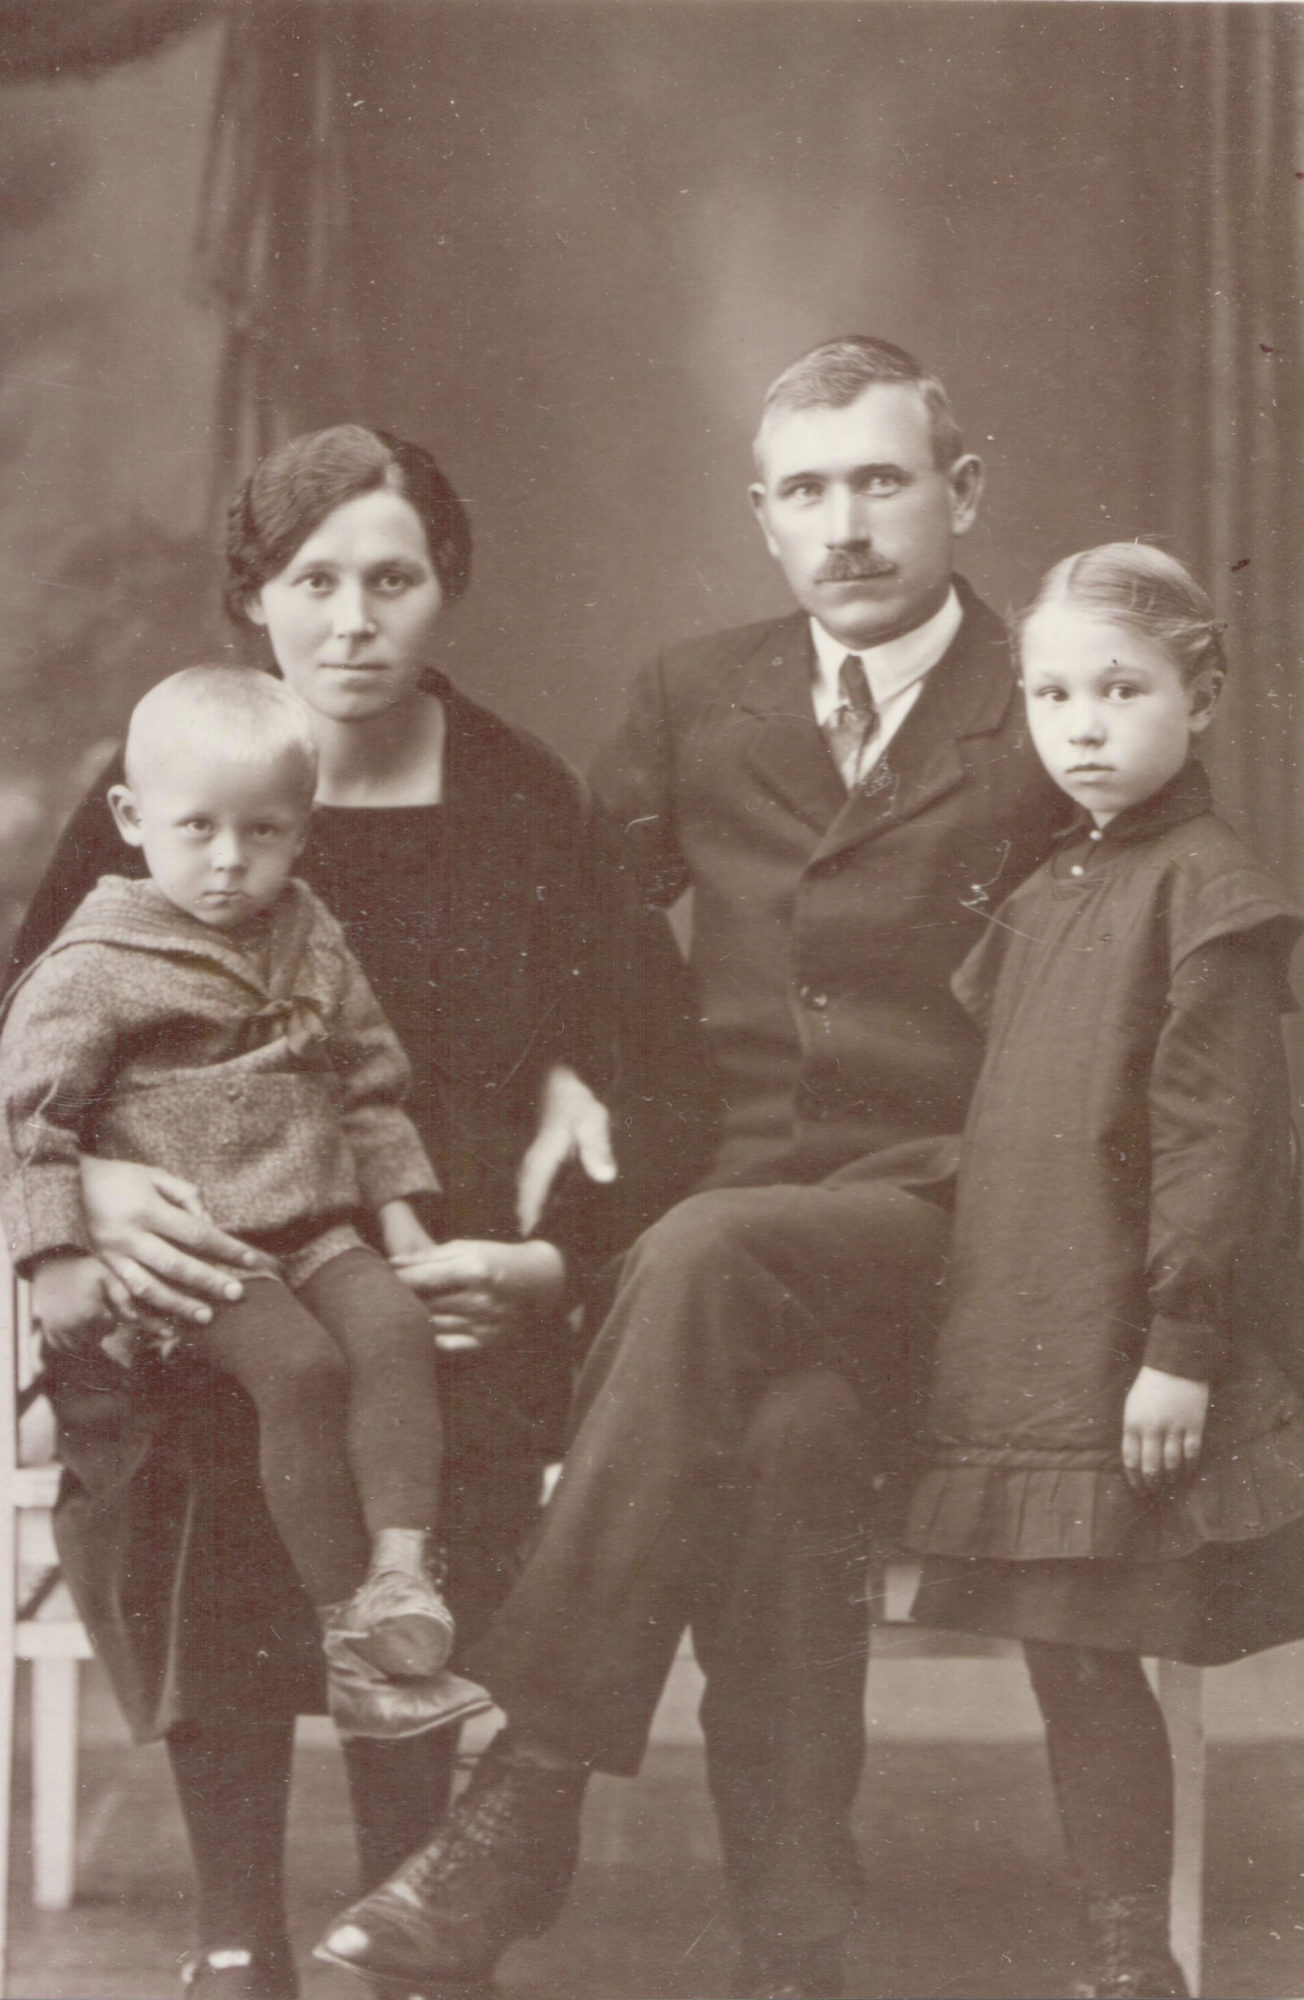 Jānis with his parents and sister Eri- ka, 1945